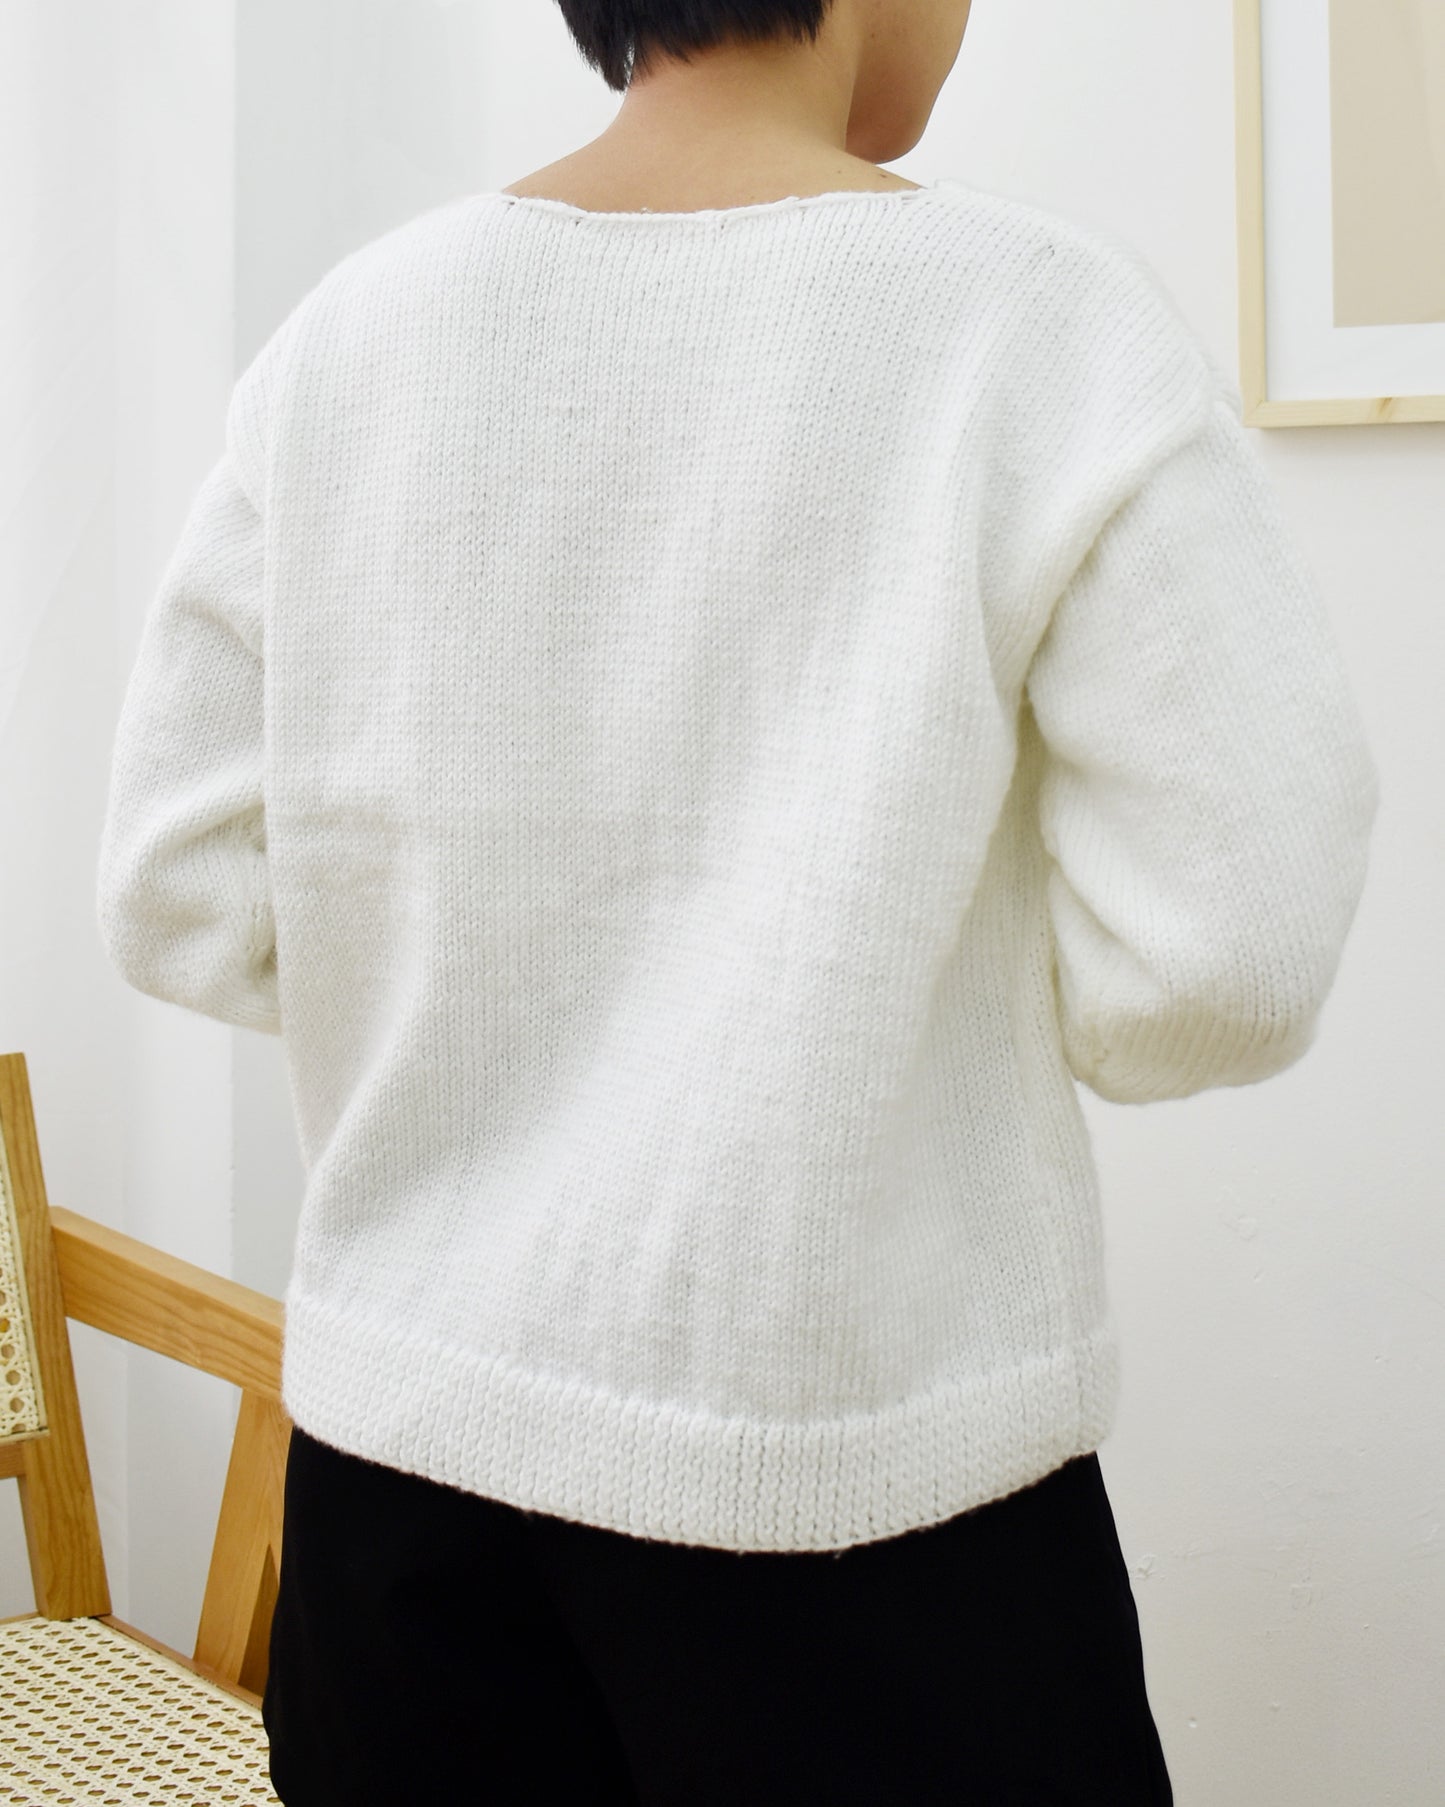 Sweater No.23 | Easy knitting pattern